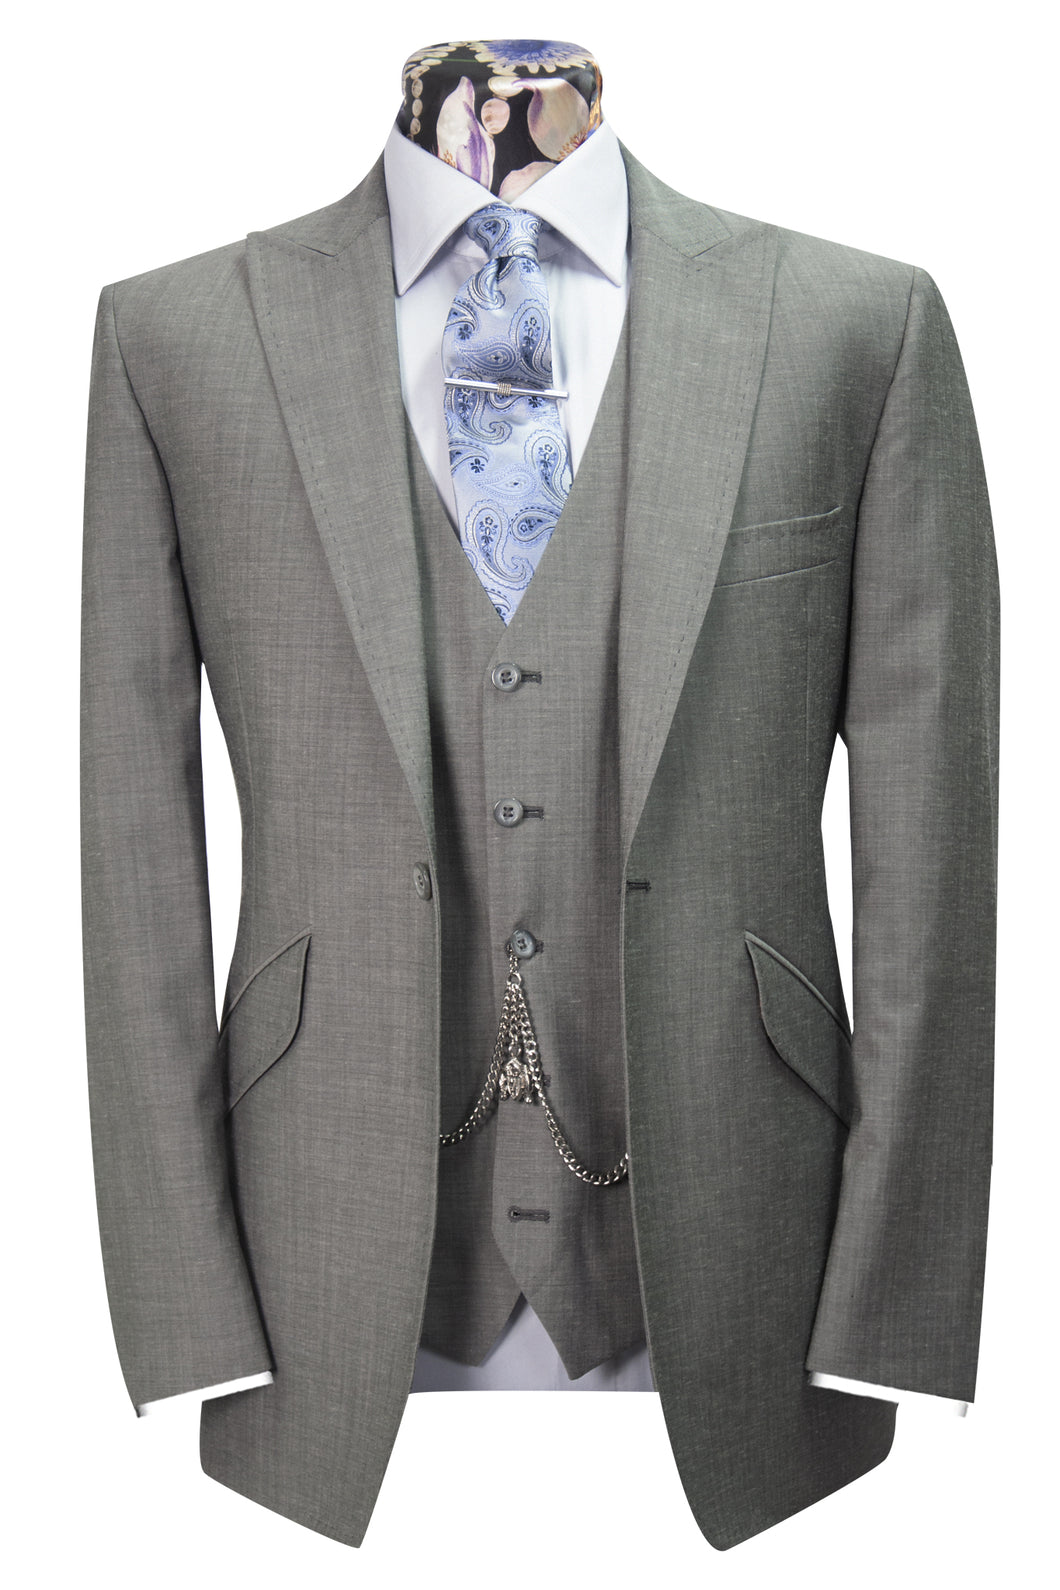 The Seaton Spanish Grey Suit